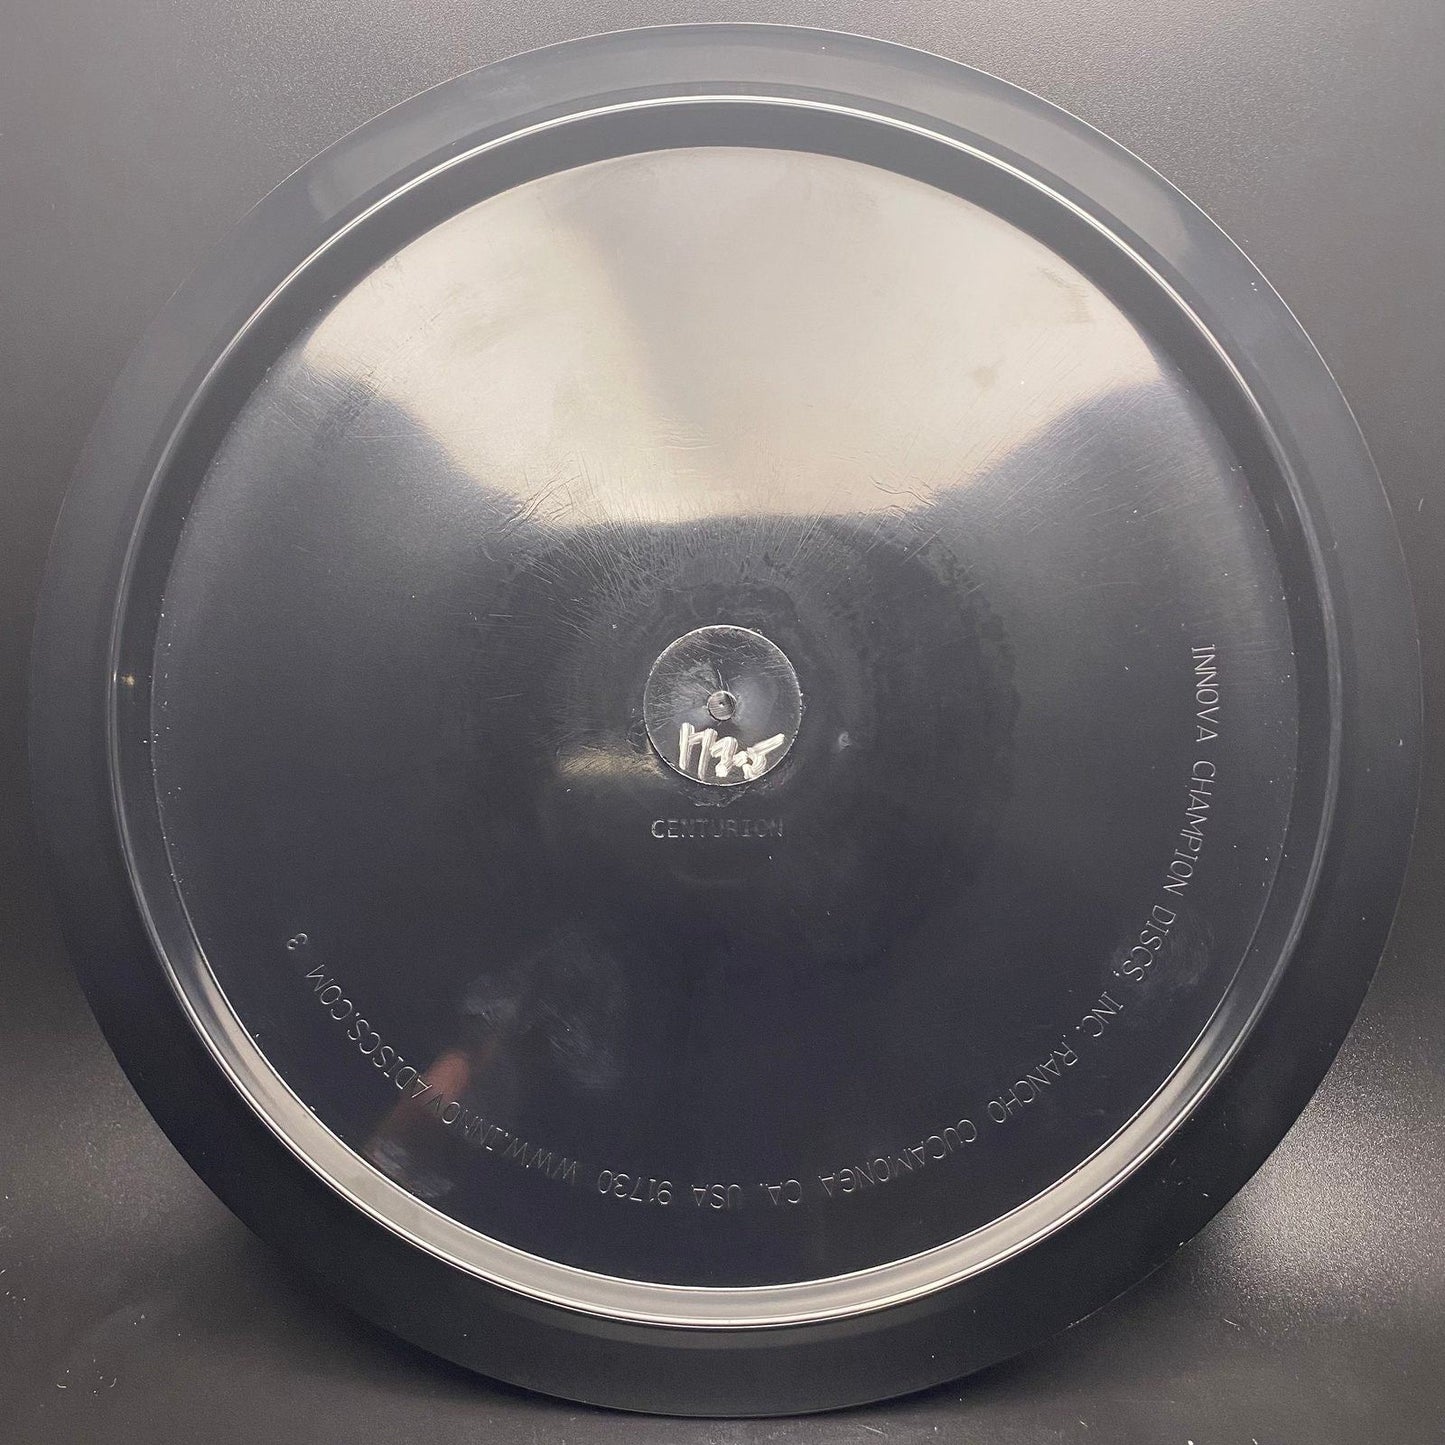 S-Blend Centurion - Black Limited Edition Infinite Discs